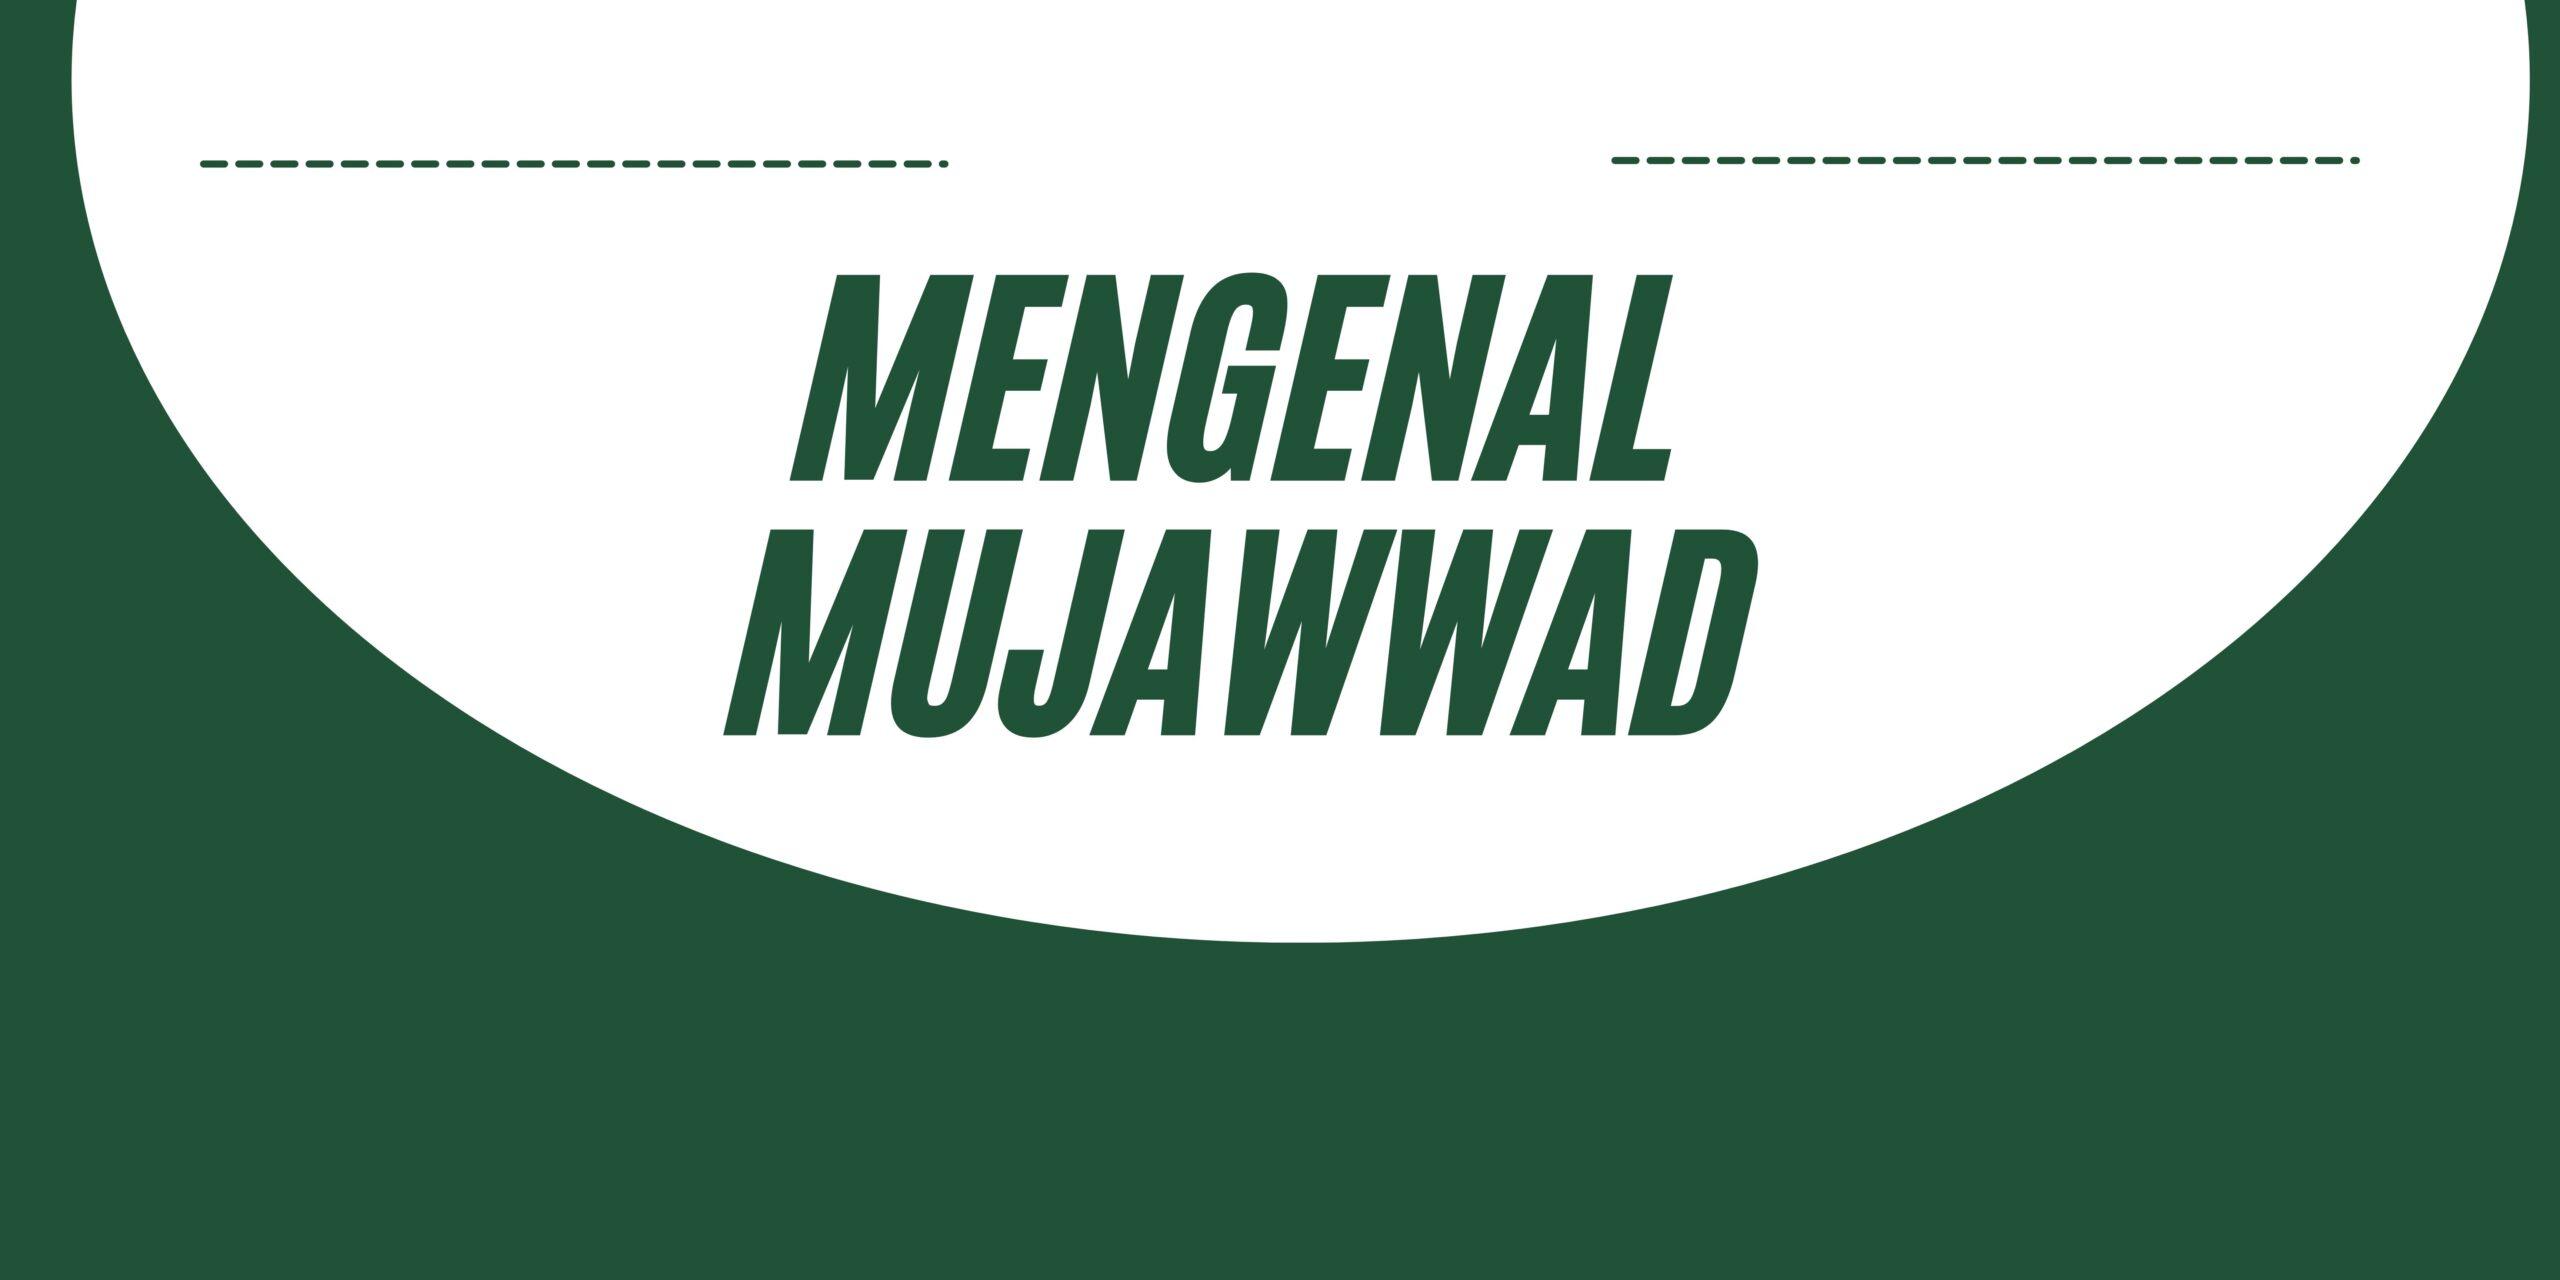 mujawwad